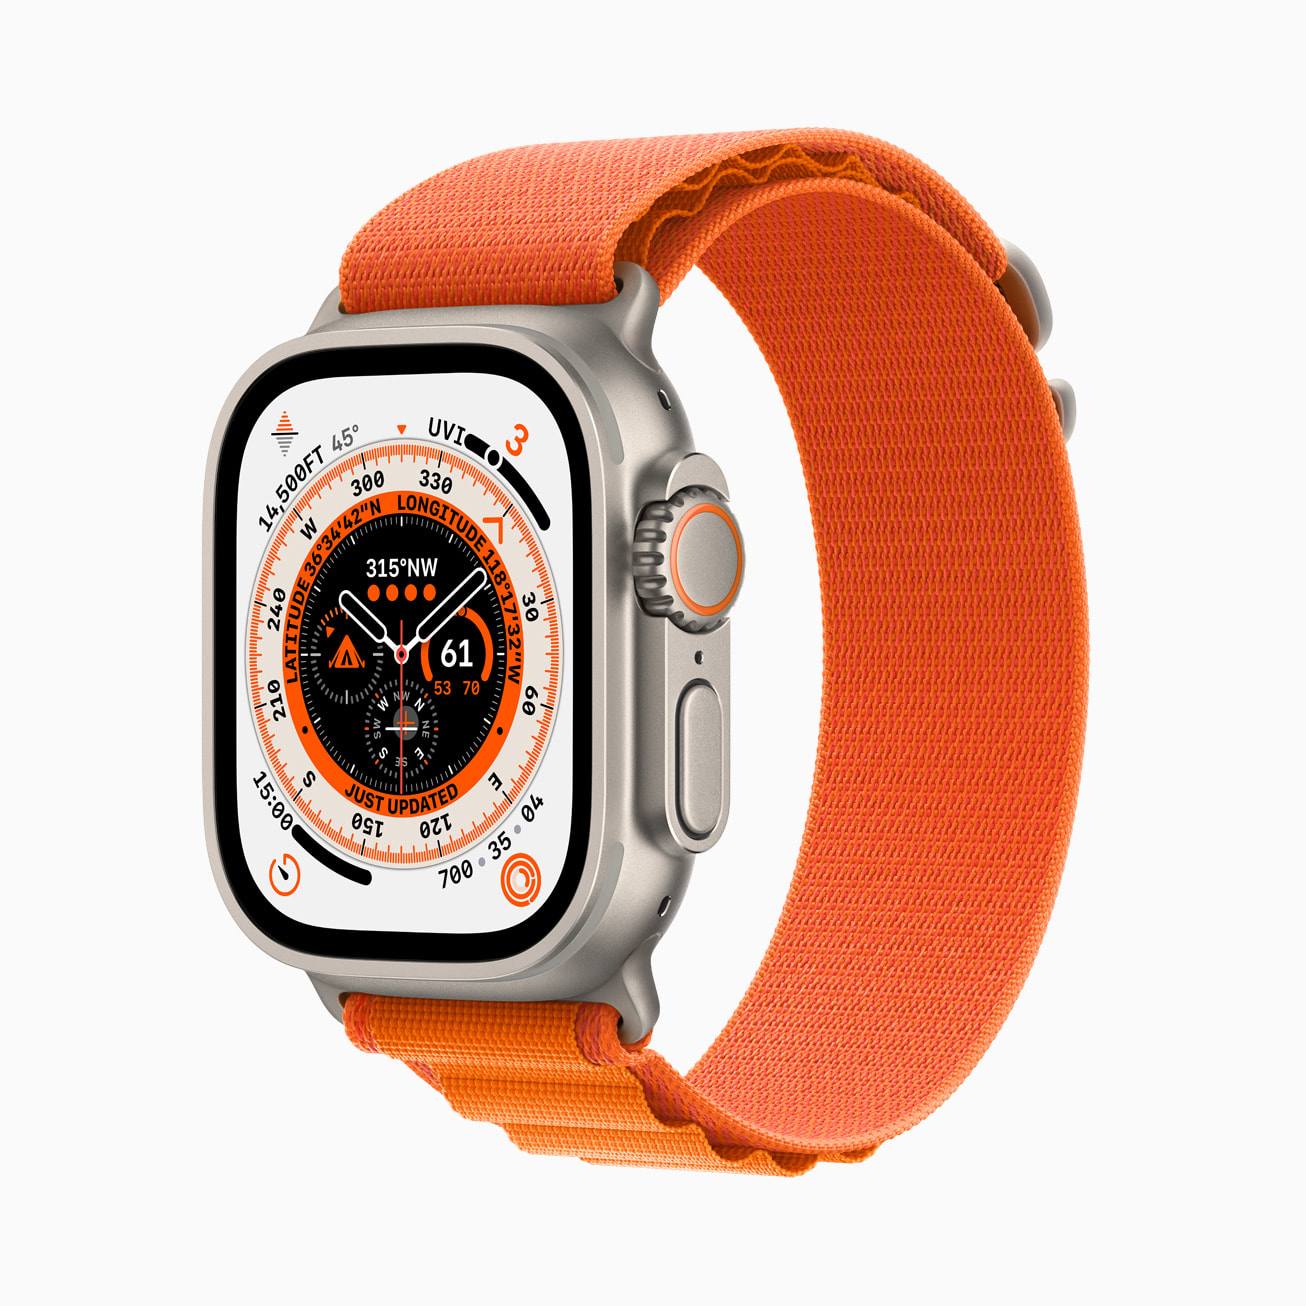 Apple Watch Comparison